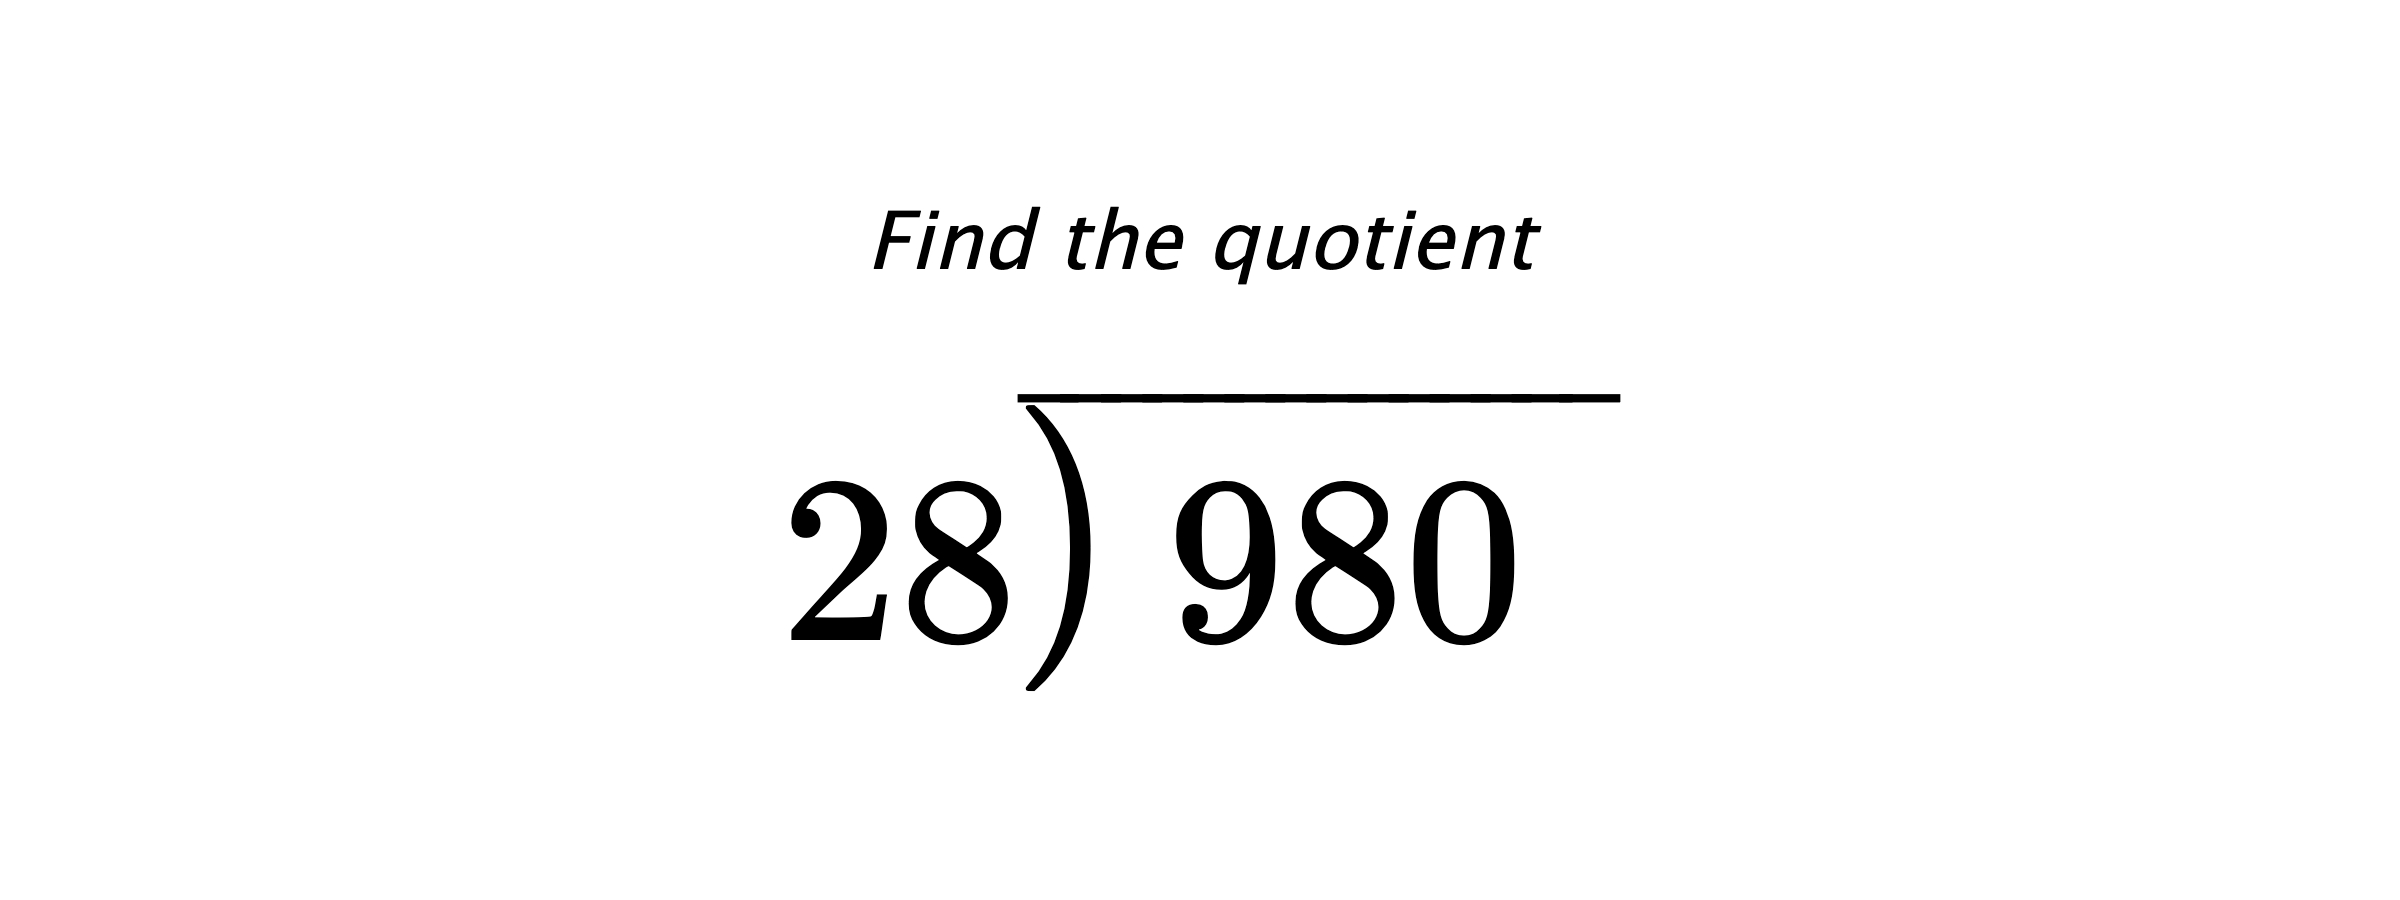 Find the quotient $ 28{\overline{\smash{\raise.3ex\hbox{$\big)$}}\,980\phantom{)}}} $